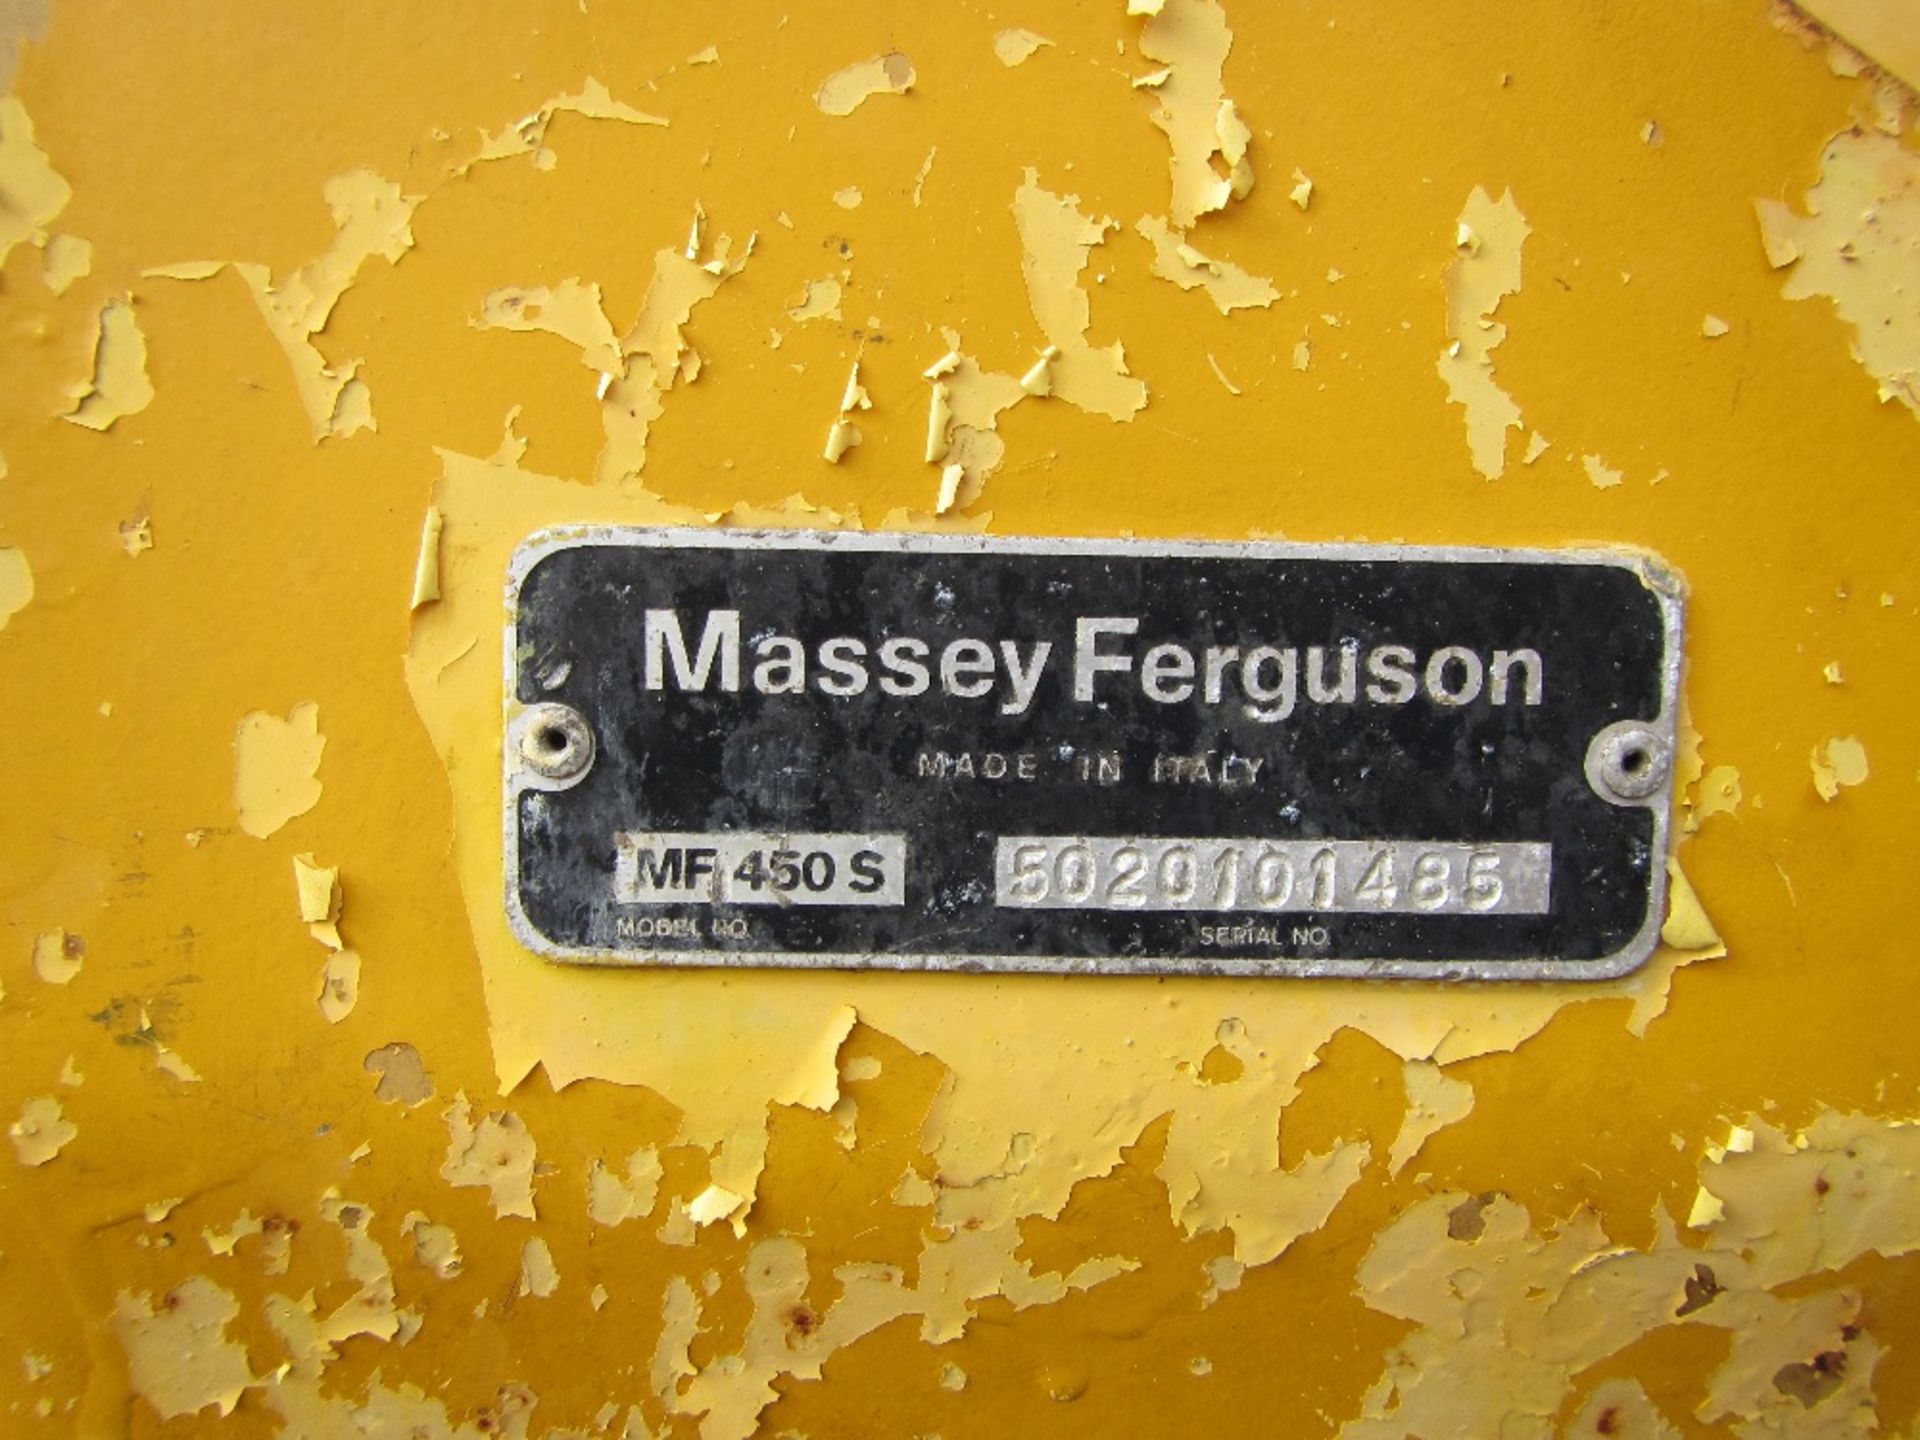 Massey Ferguson 450S 14 Ton 360 Degree Excavator Ser. No. 5020101485 - Image 3 of 4